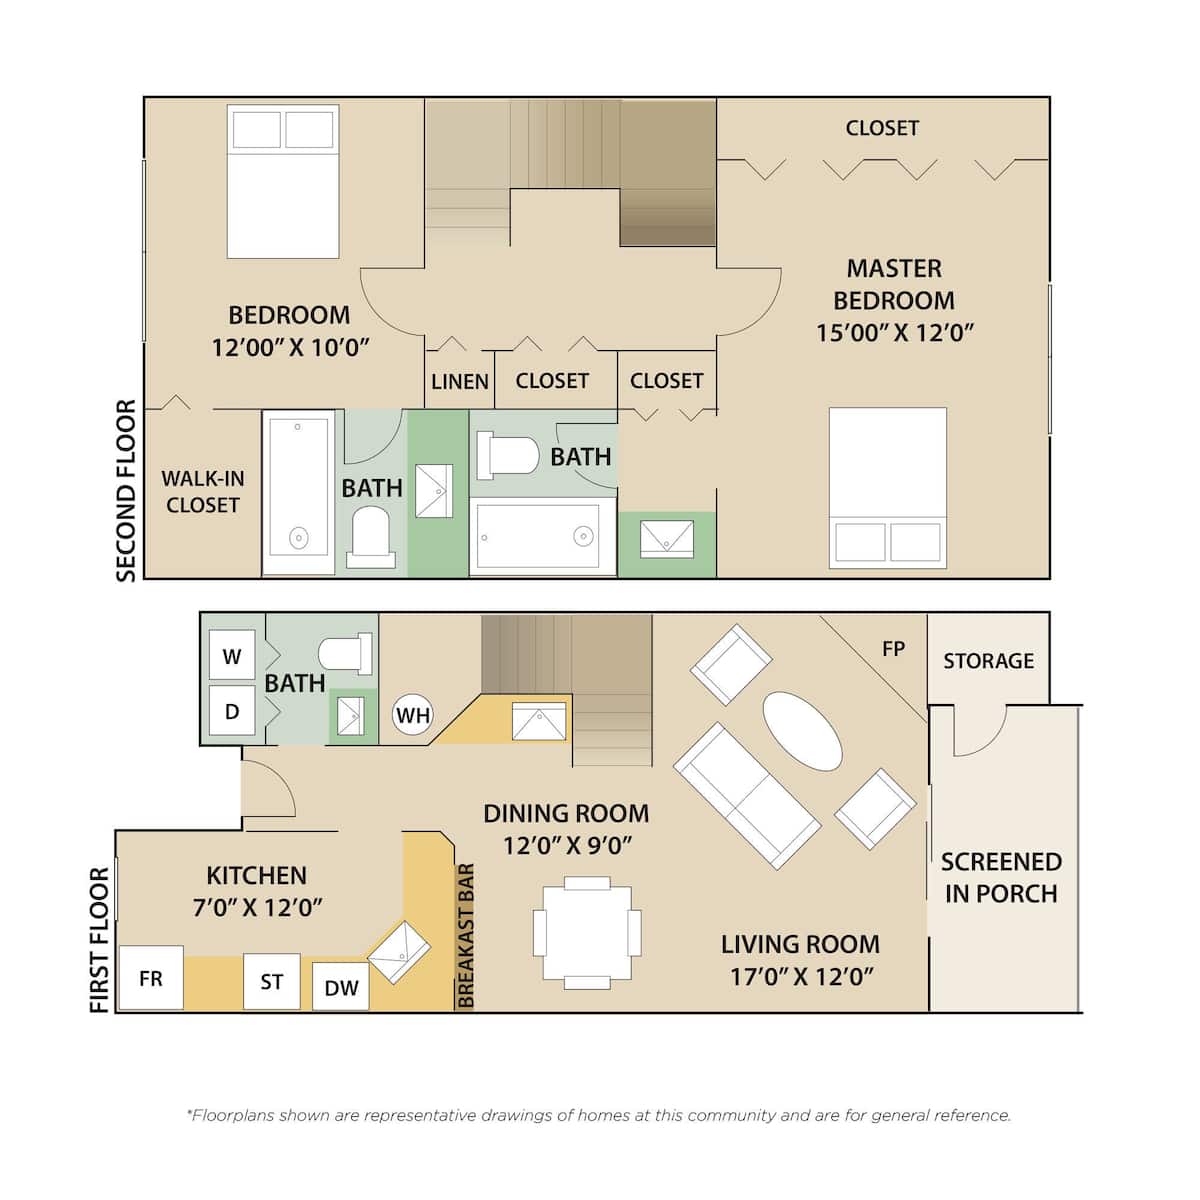 Floorplan diagram for Doral Townhome, showing 2 bedroom